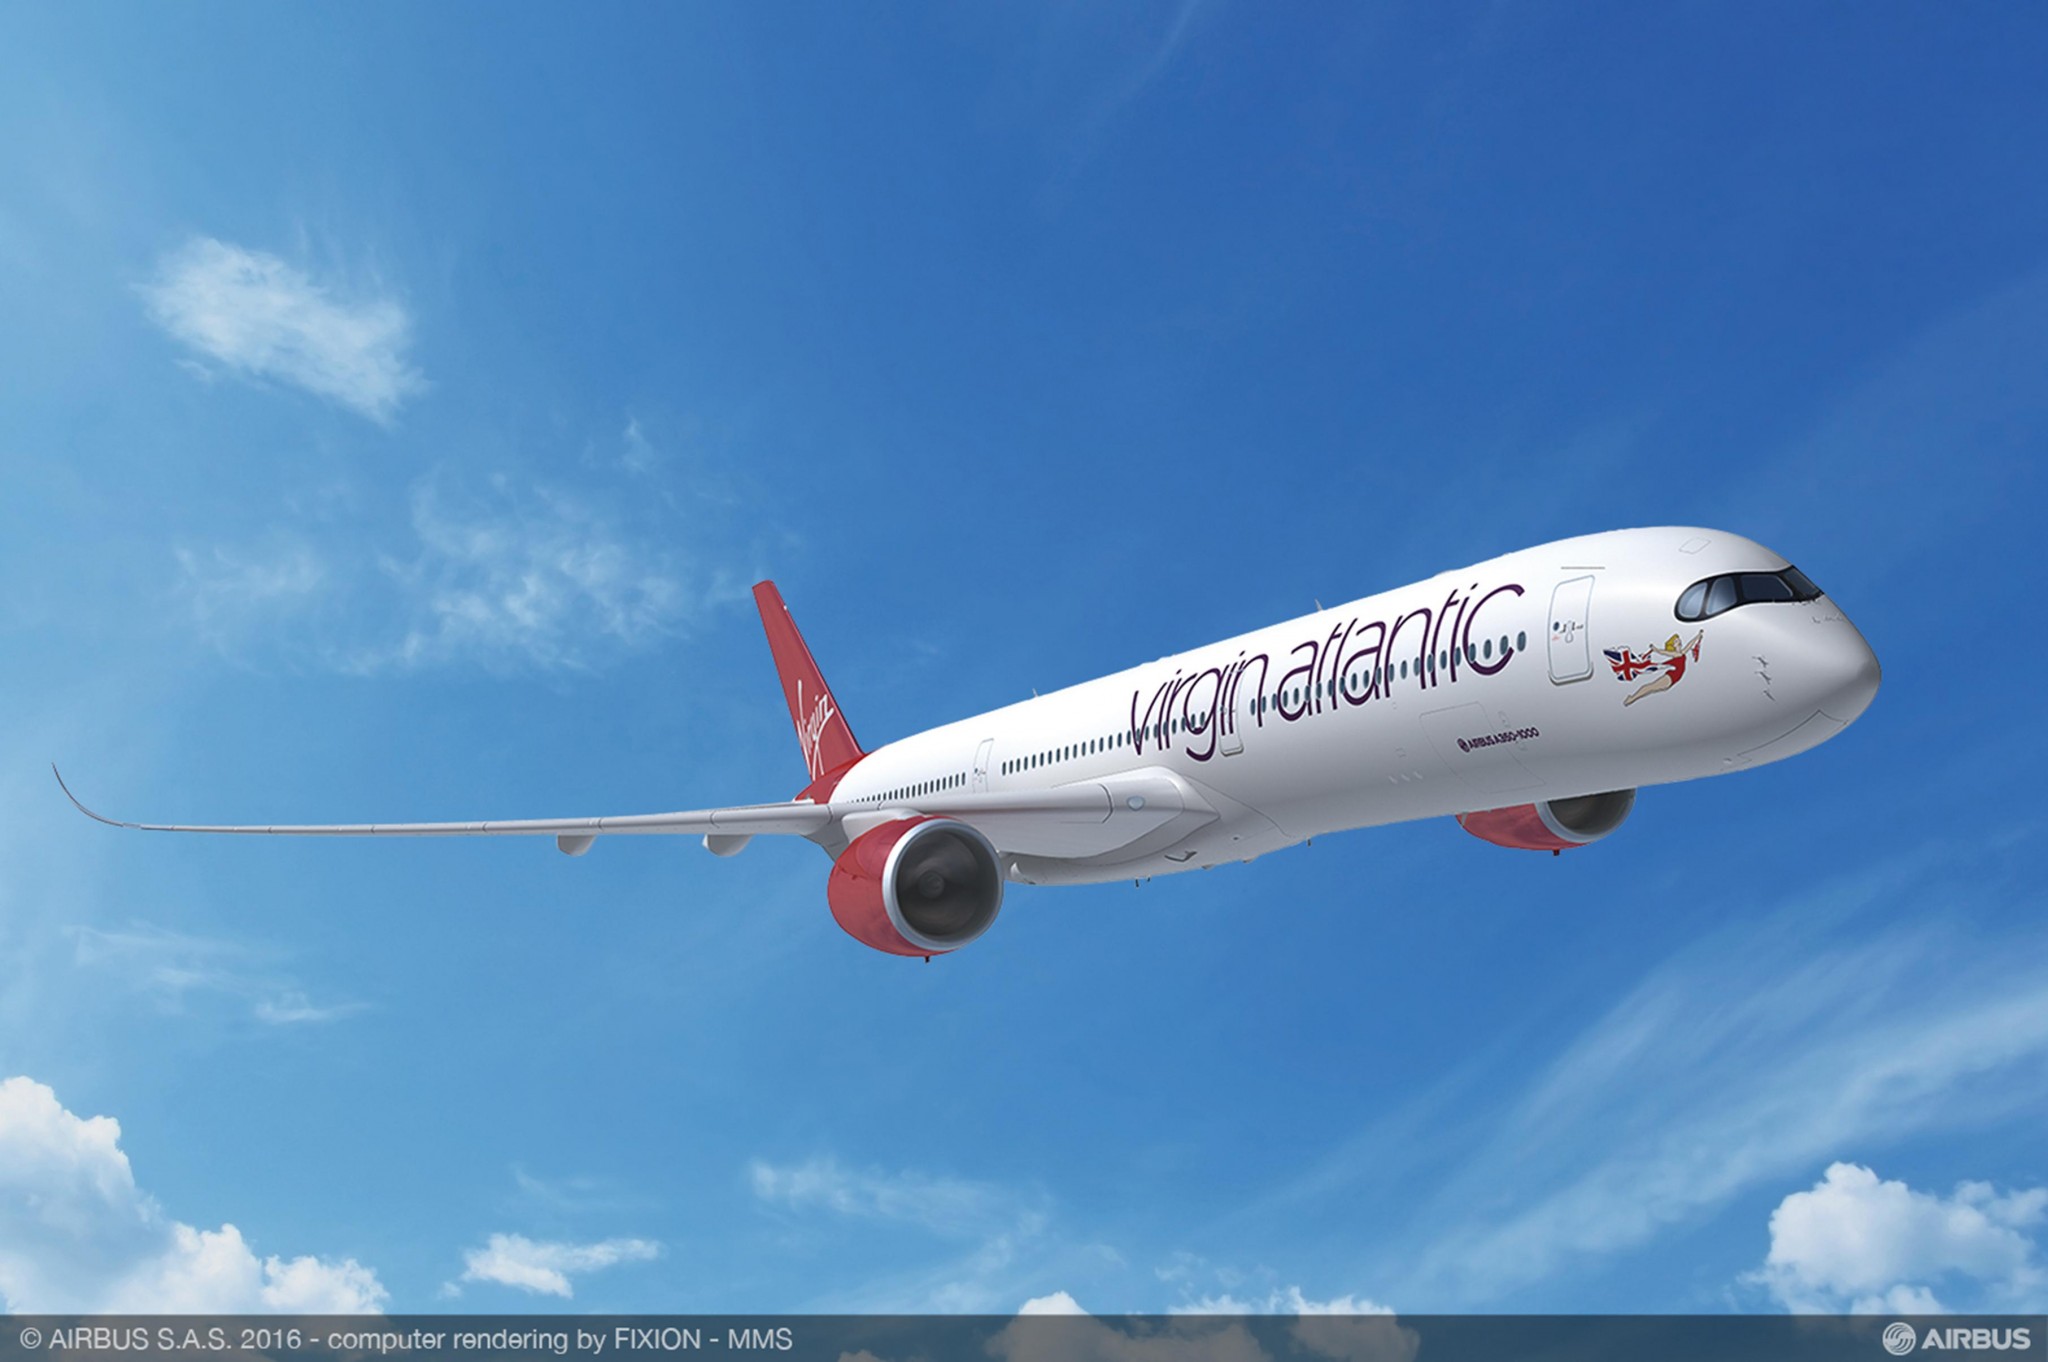 Virgin Atlantic expands at Manchester Airport